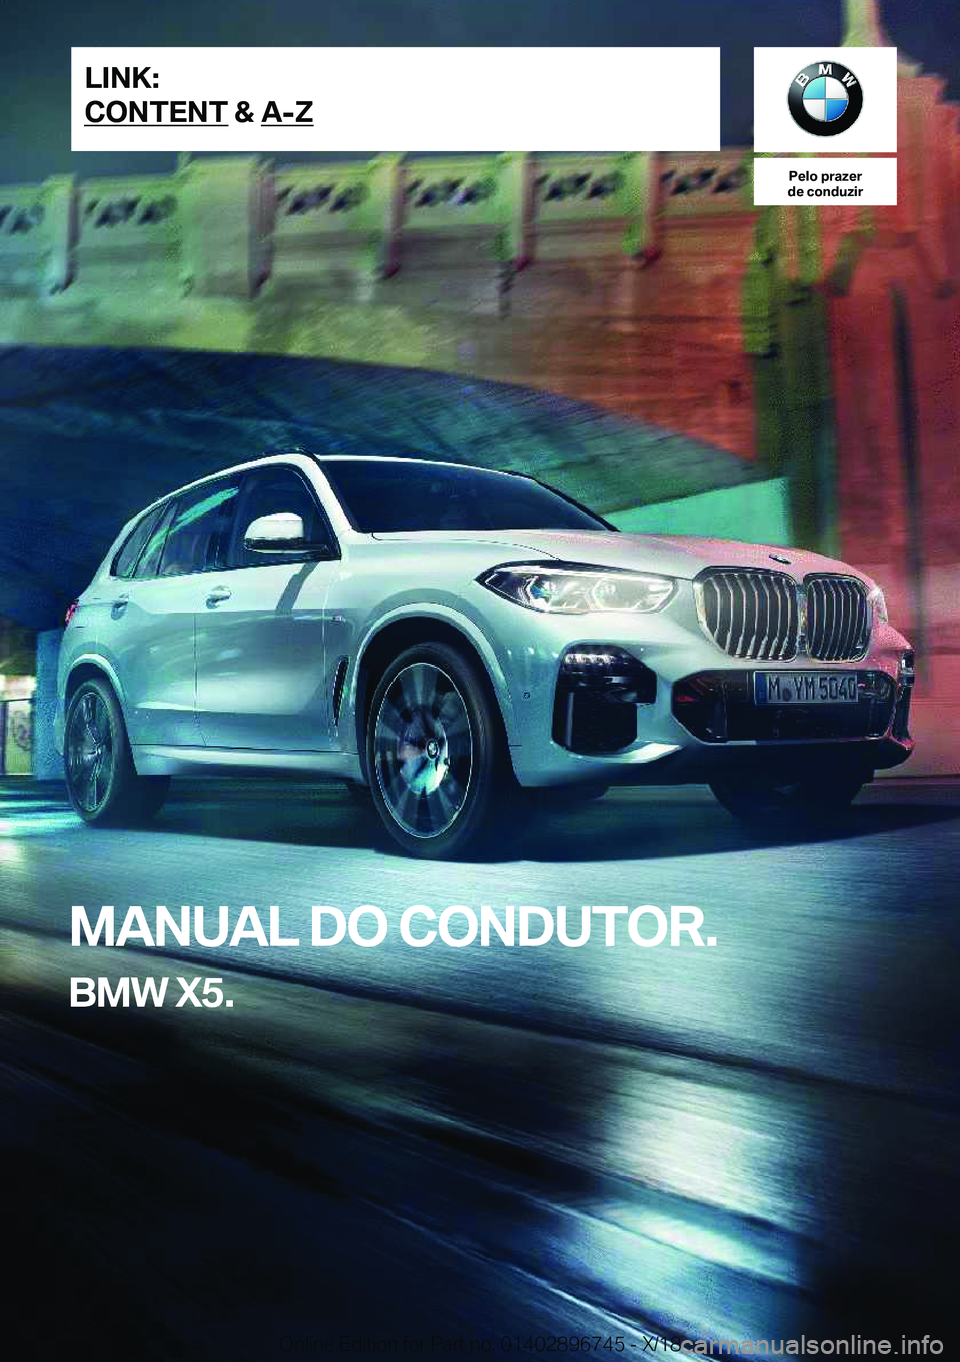 BMW X5 2019  Manual do condutor (in Portuguese) �P�e�l�o��p�r�a�z�e�r
�d�e��c�o�n�d�u�z�i�r
�M�A�N�U�A�L��D�O��C�O�N�D�U�T�O�R�.
�B�M�W��X�5�.�L�I�N�K�:
�C�O�N�T�E�N�T��&��A�-�Z�O�n�l�i�n�e��E�d�i�t�i�o�n��f�o�r��P�a�r�t��n�o�.��0�1�4�0